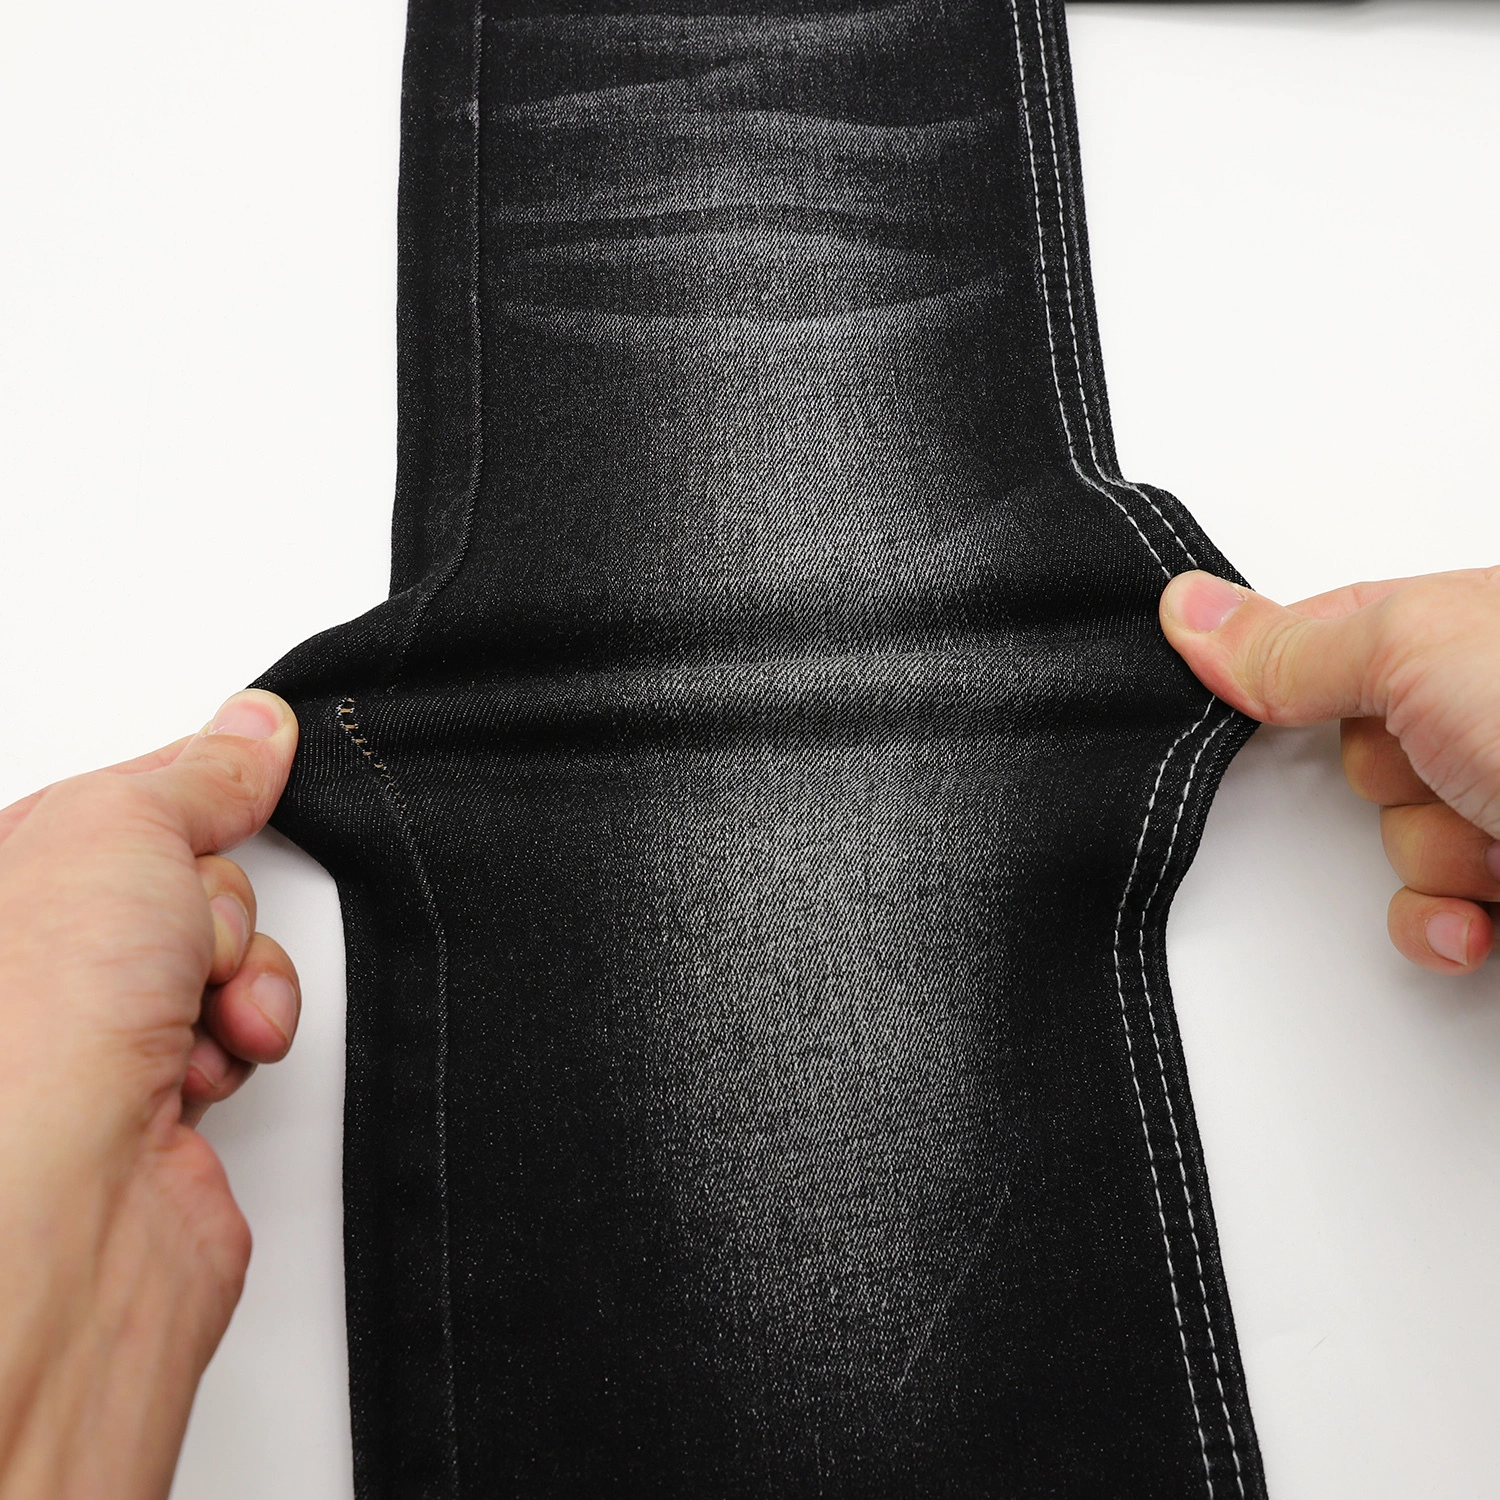 205H0-7H 10oz black denim fabric stretchable with spandex 1